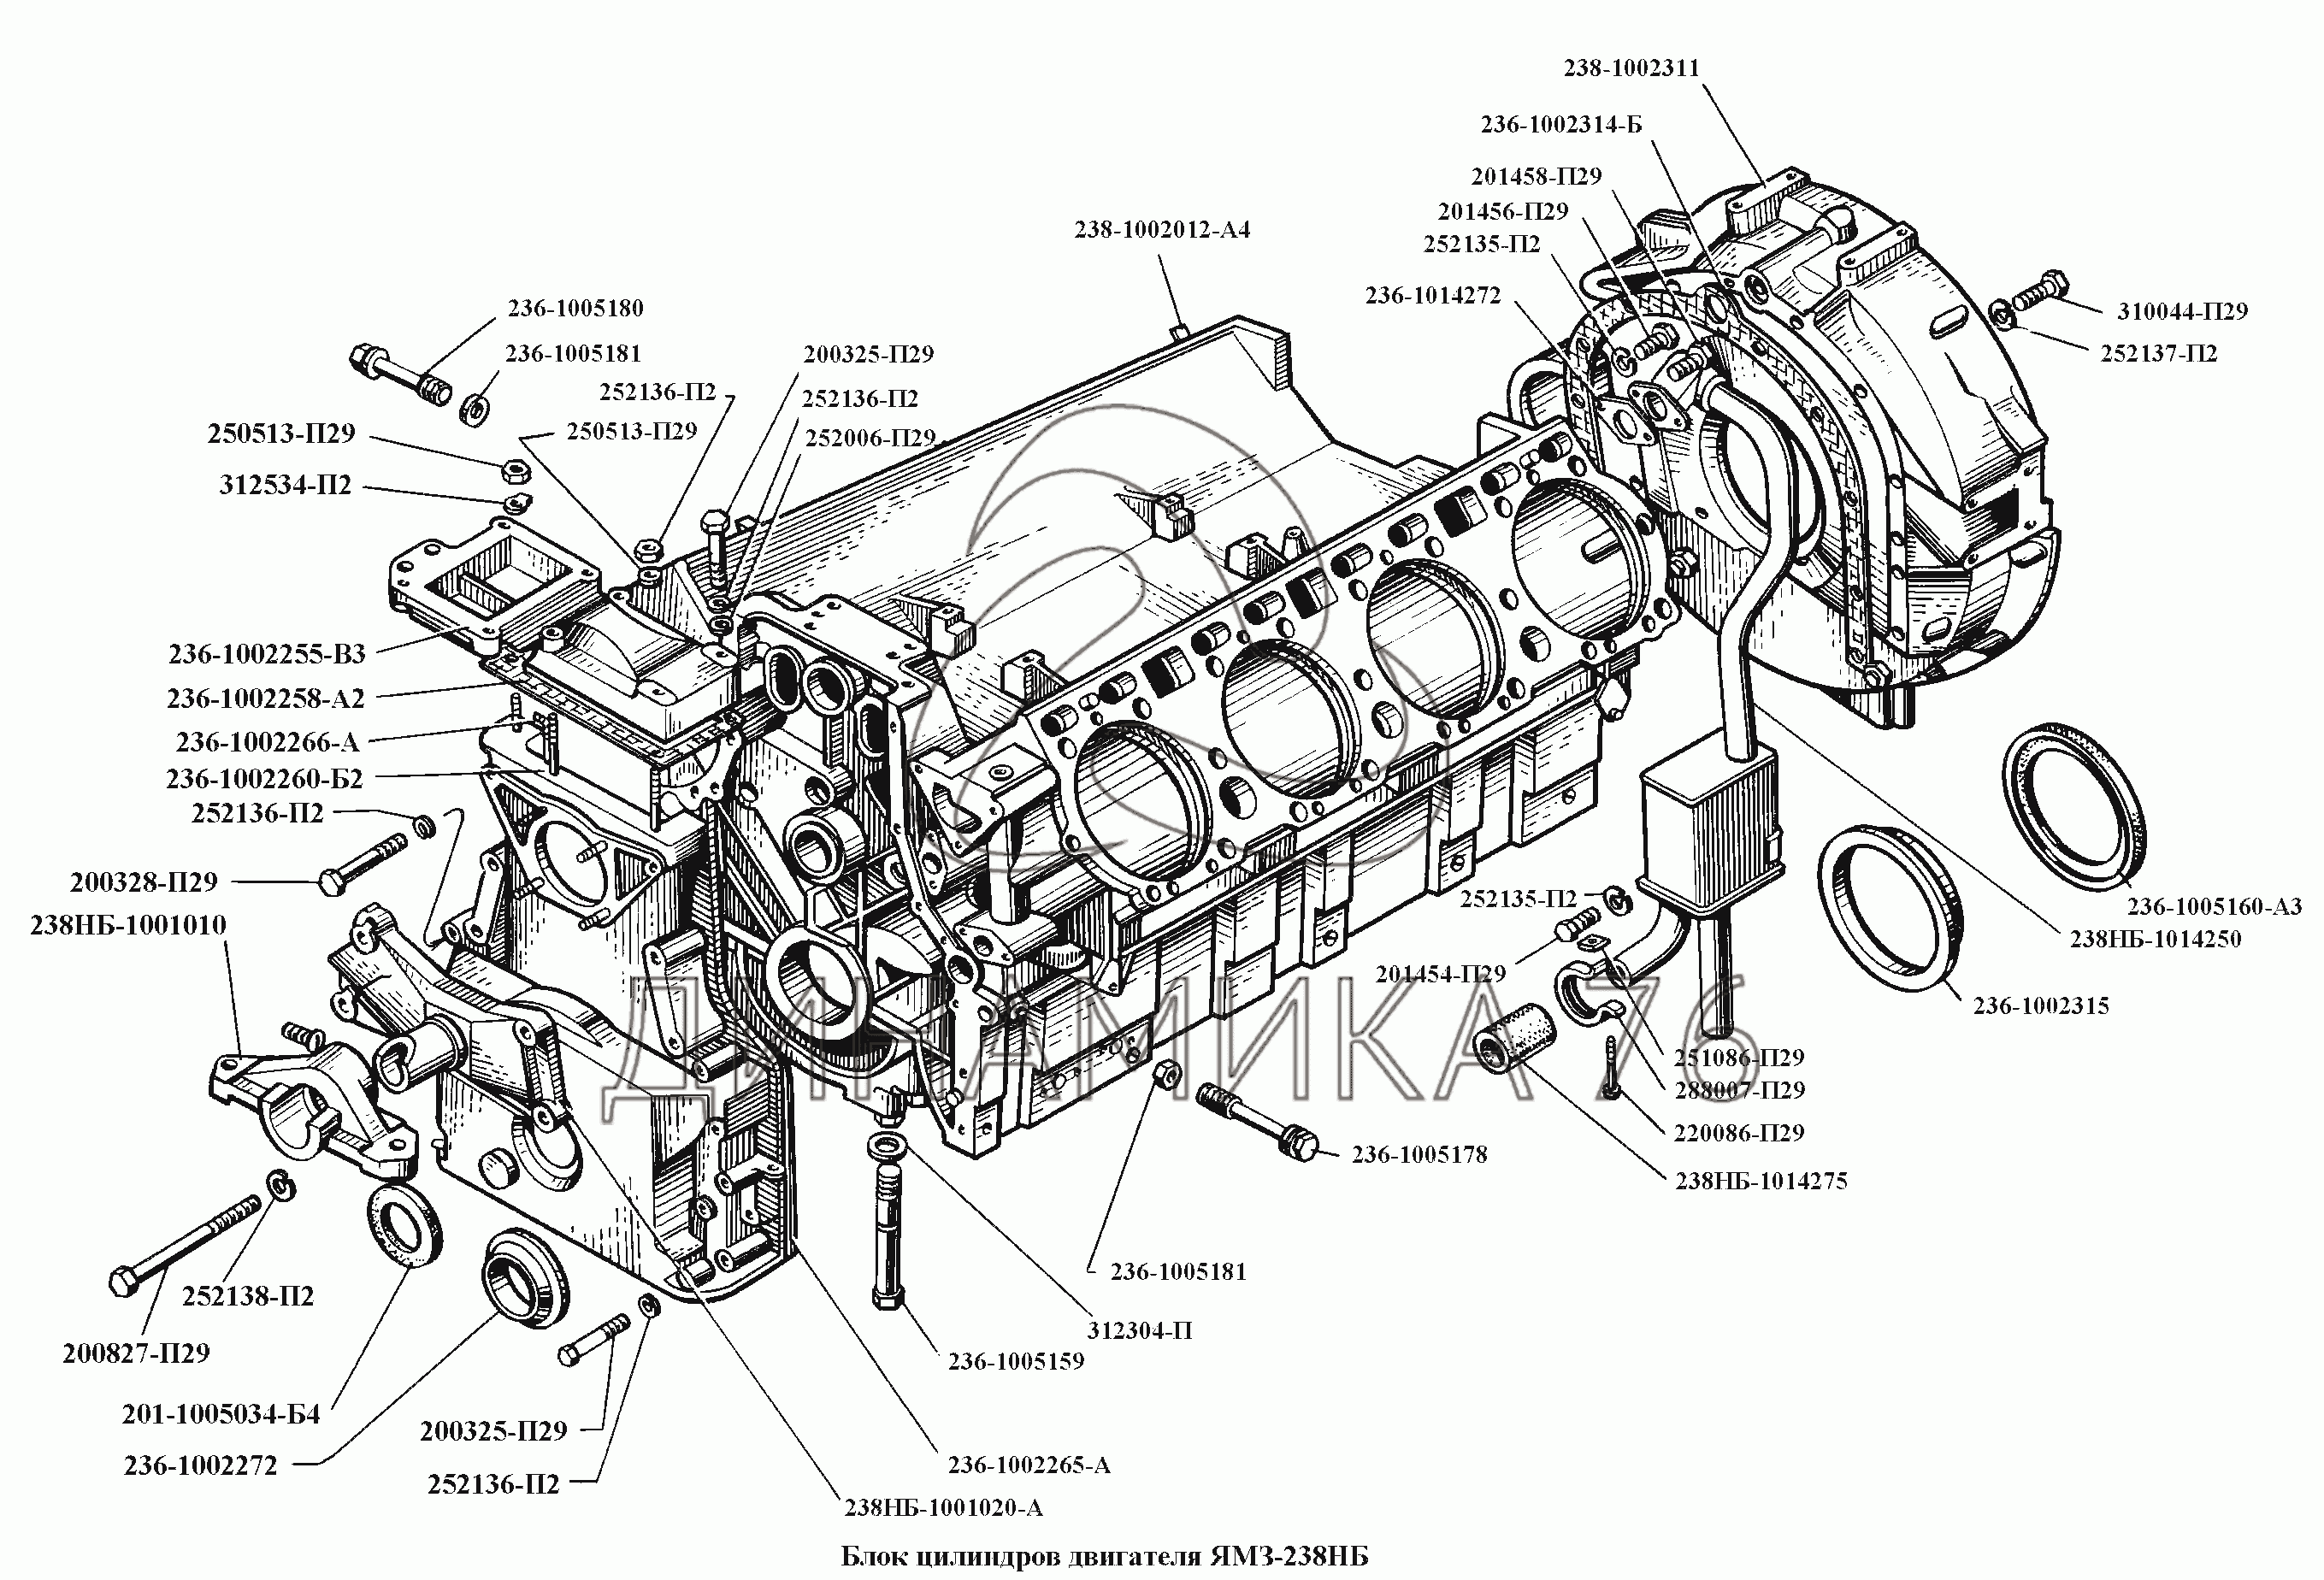 Блок цилиндров двигателя ЯМЗ 238